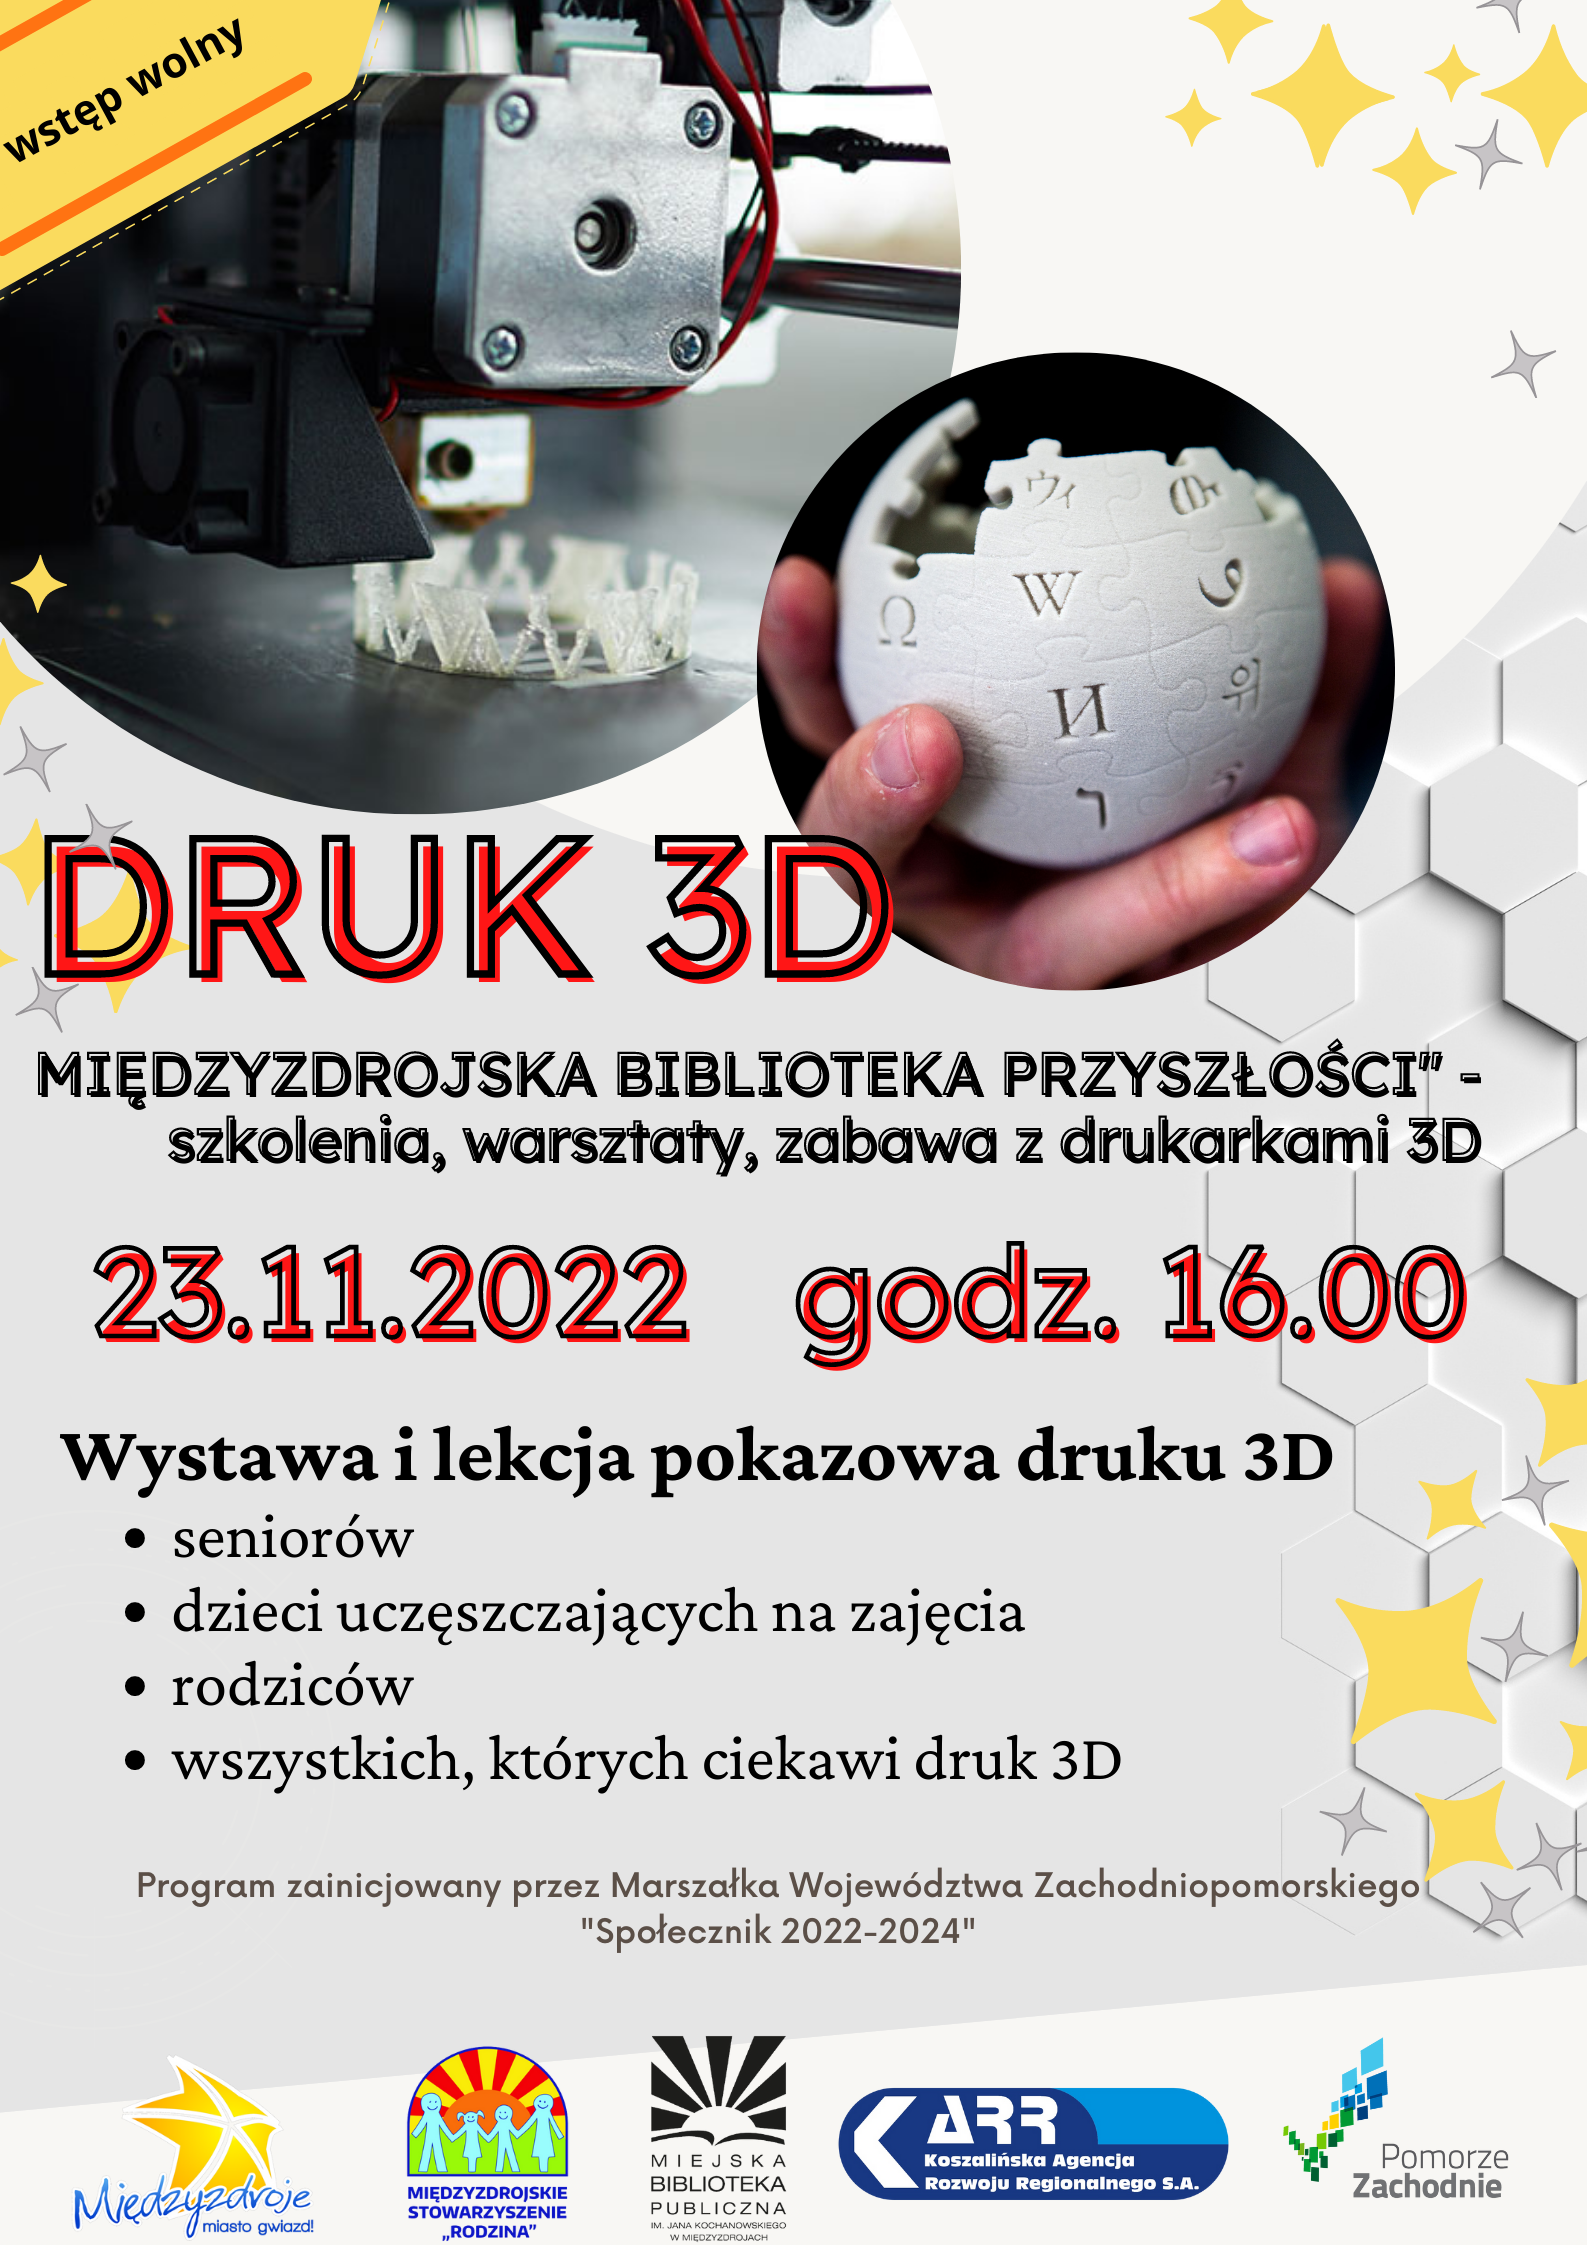 Druk 3D - wystawa i lekcja pokazowa 23 listopada 2022 r.